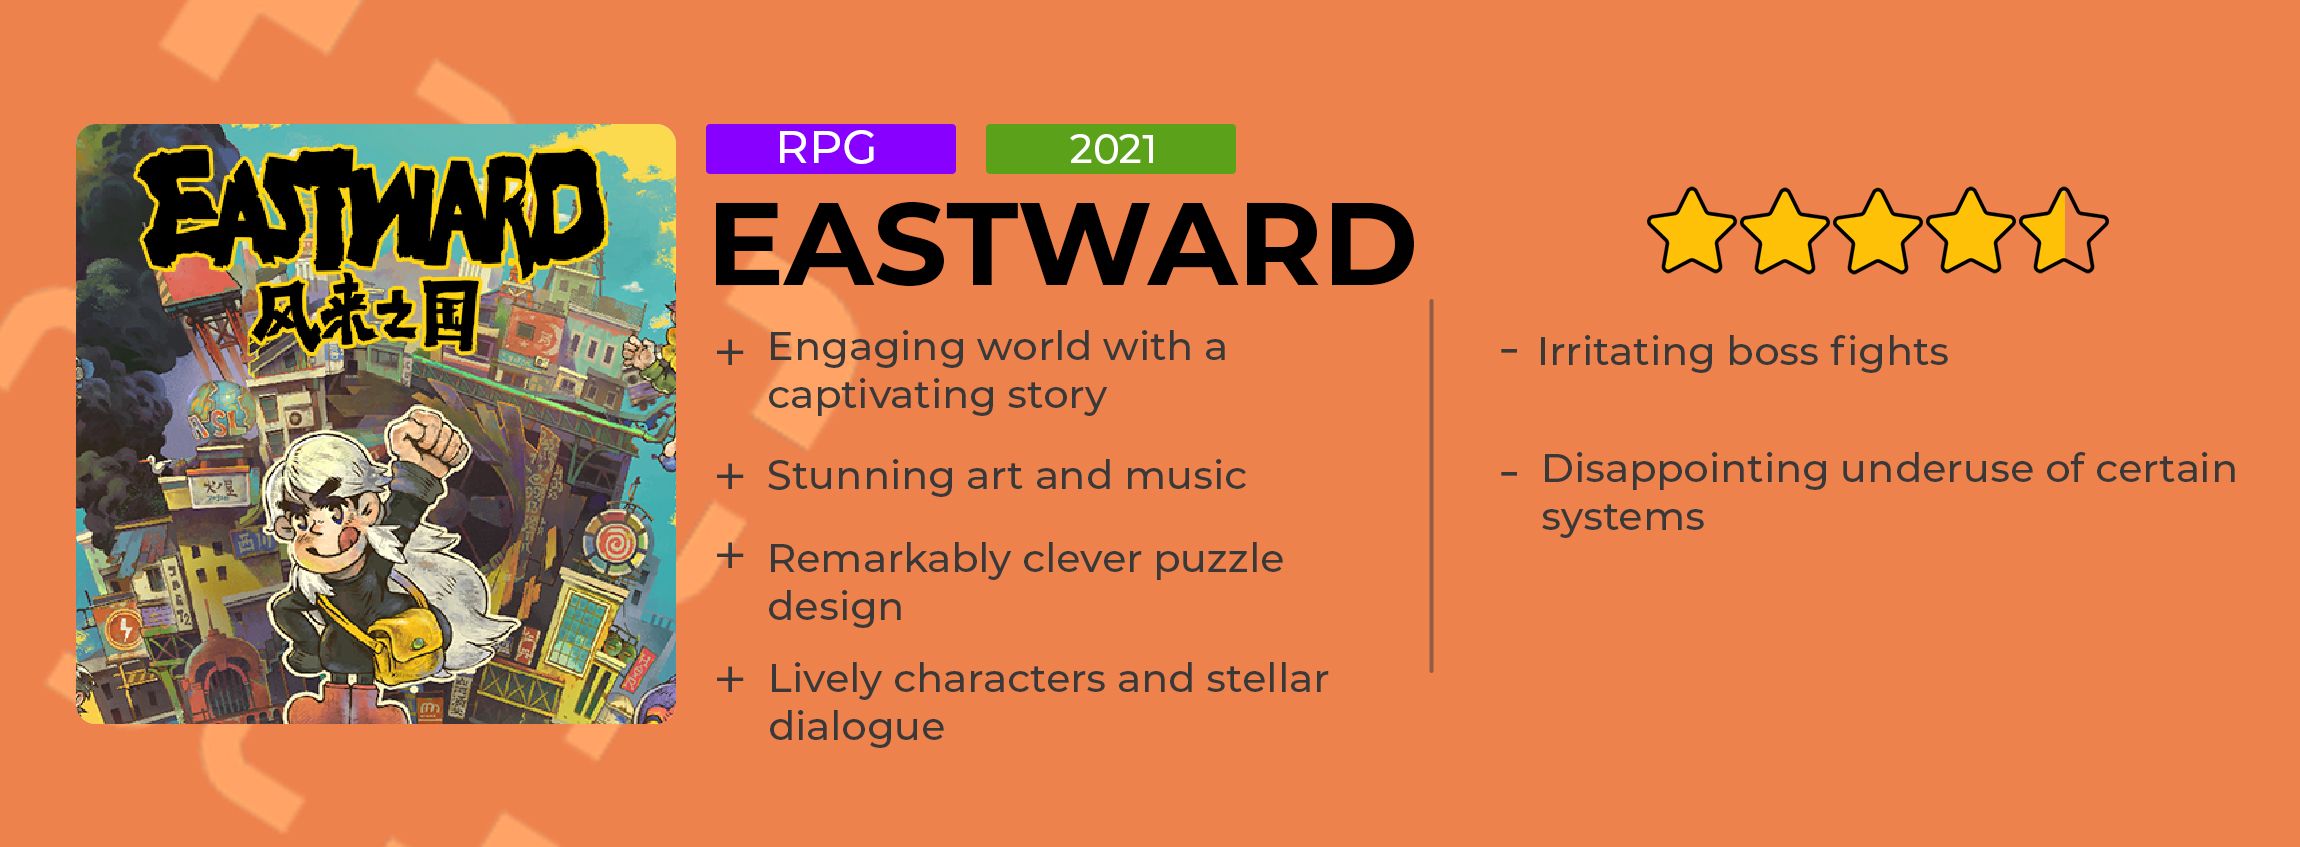 eastward-review-1